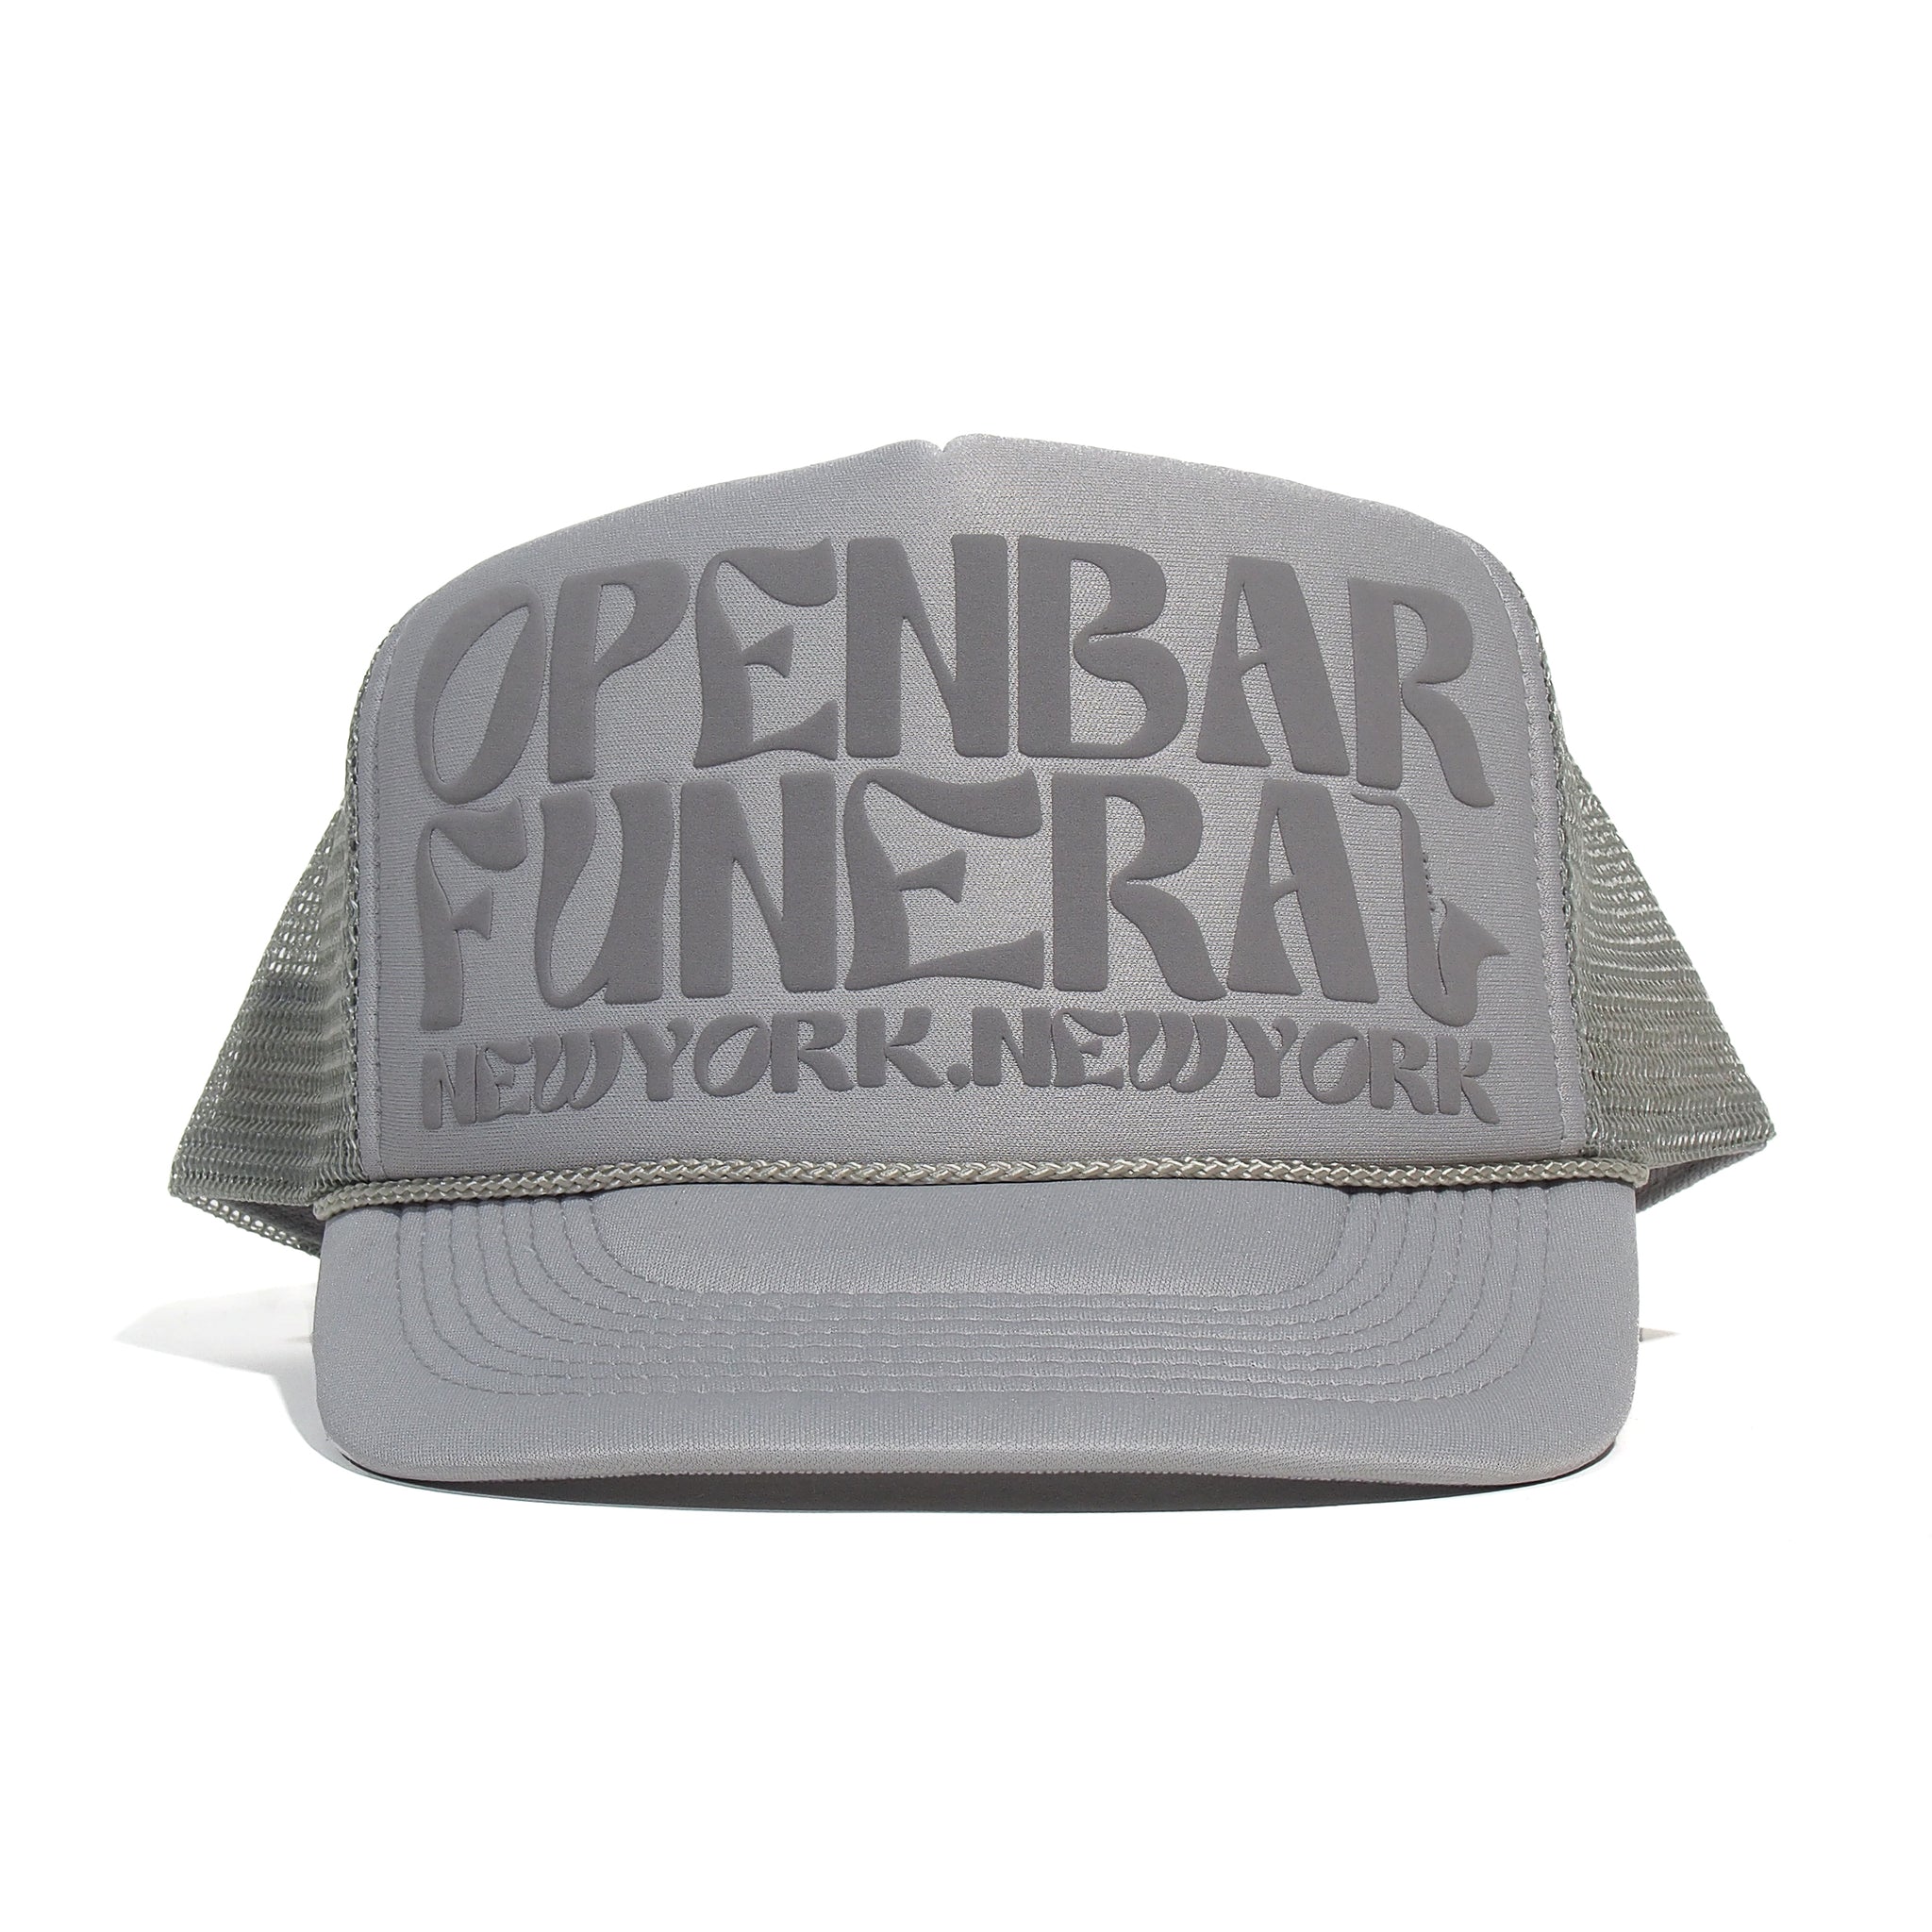 – Trucker Vintage - Hat Open Bar Jazz Funeral Grey